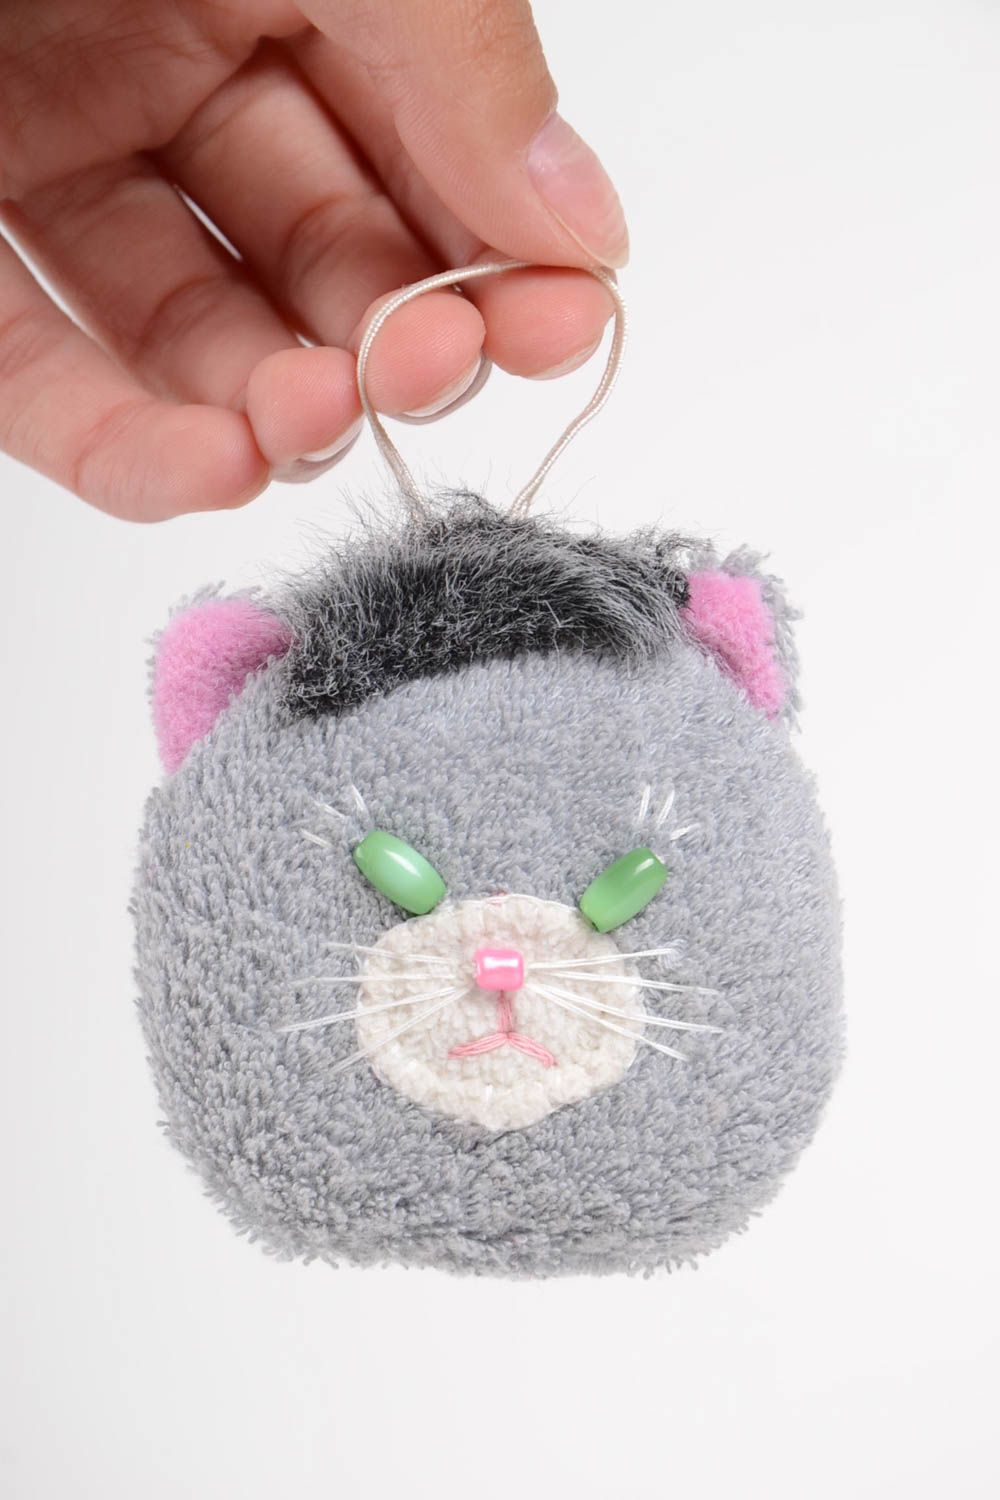 Handmade soft needle bed accessory in shape of cat stylish unusual pendant photo 2